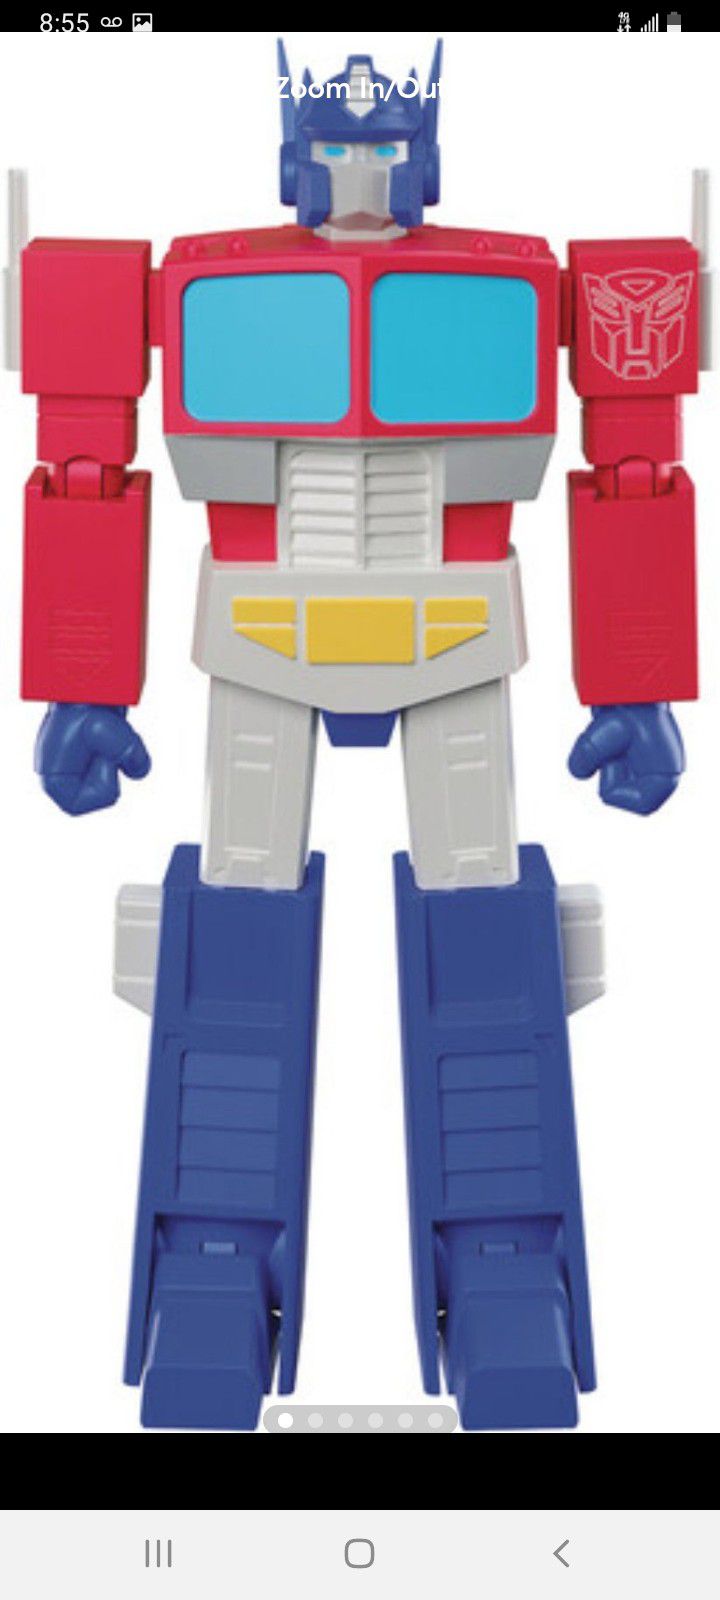 Transformers Optimus Prime Super7 Ultimates Action Figure Set